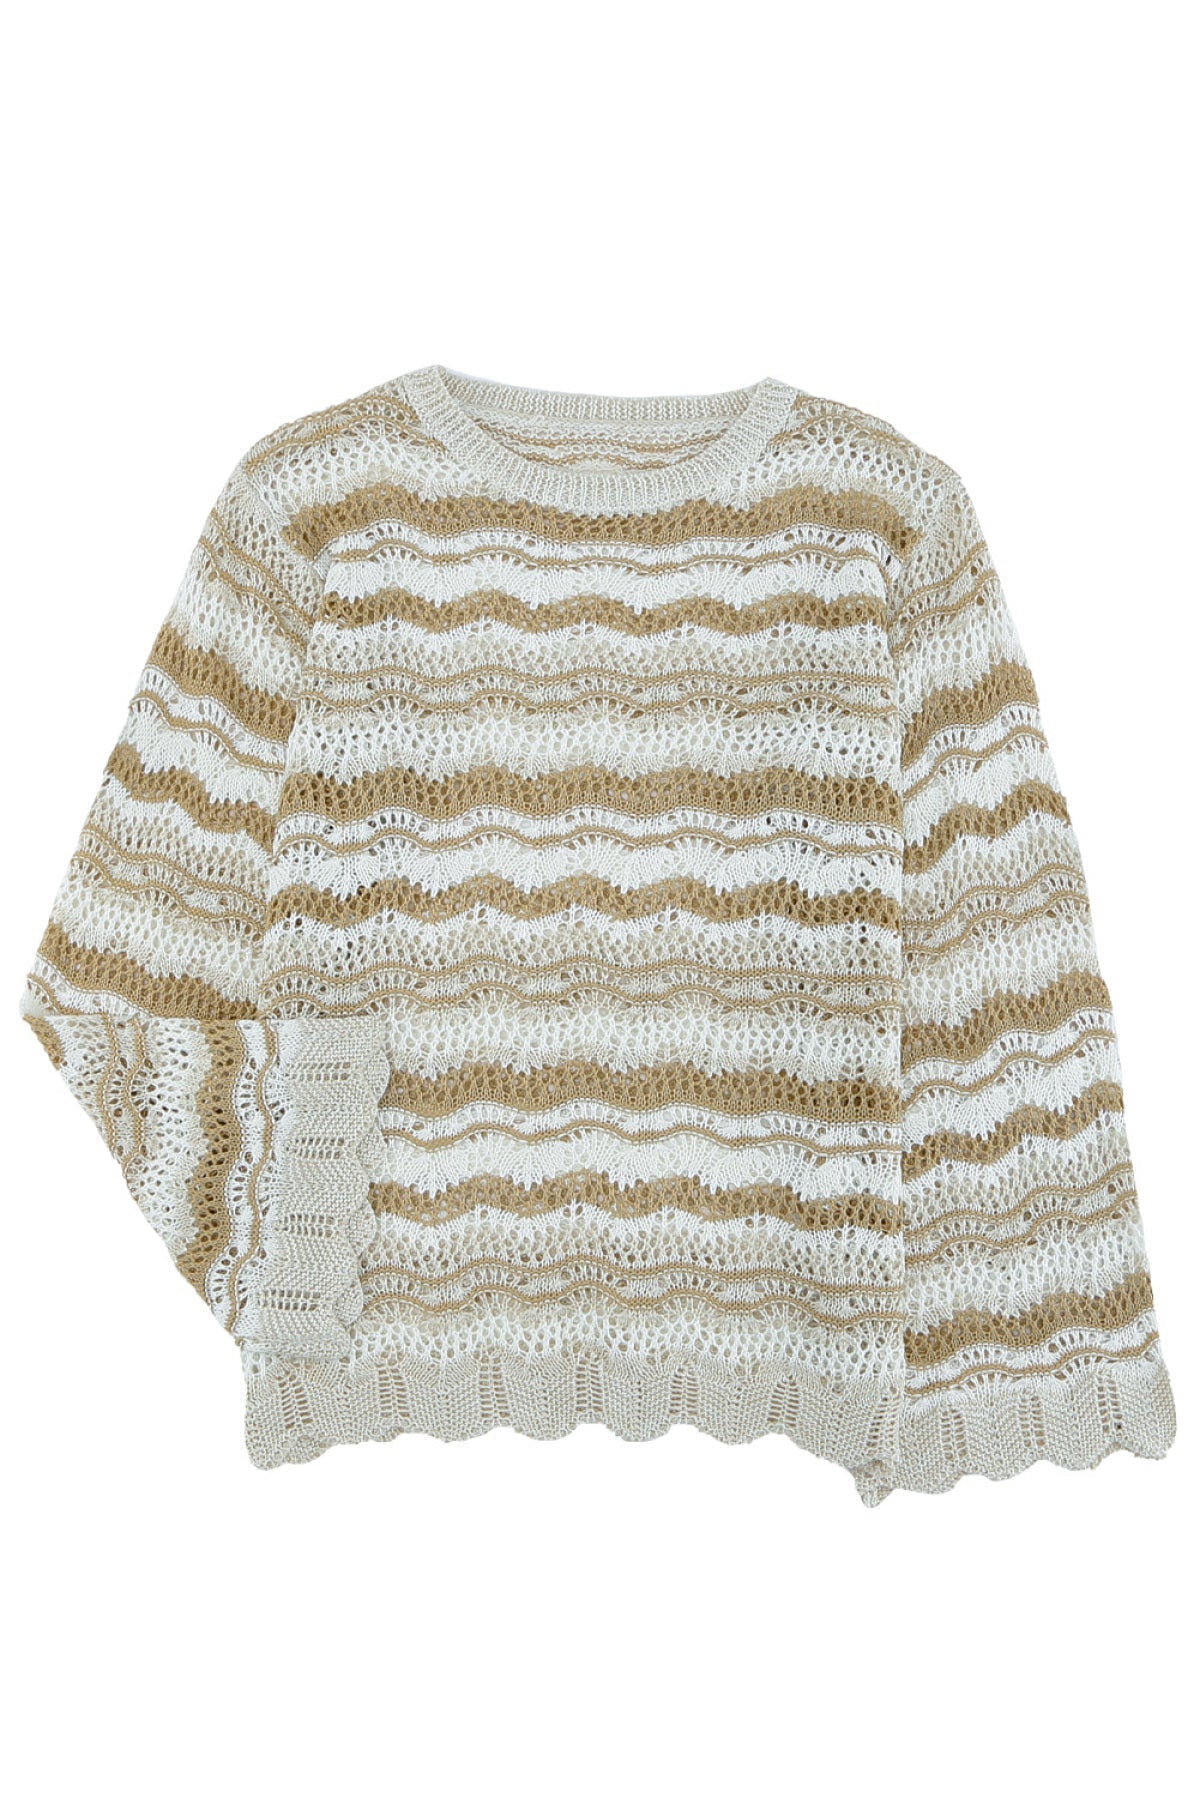 Wavy Stripe Scalloped Edge Pointelle Knit Sweater